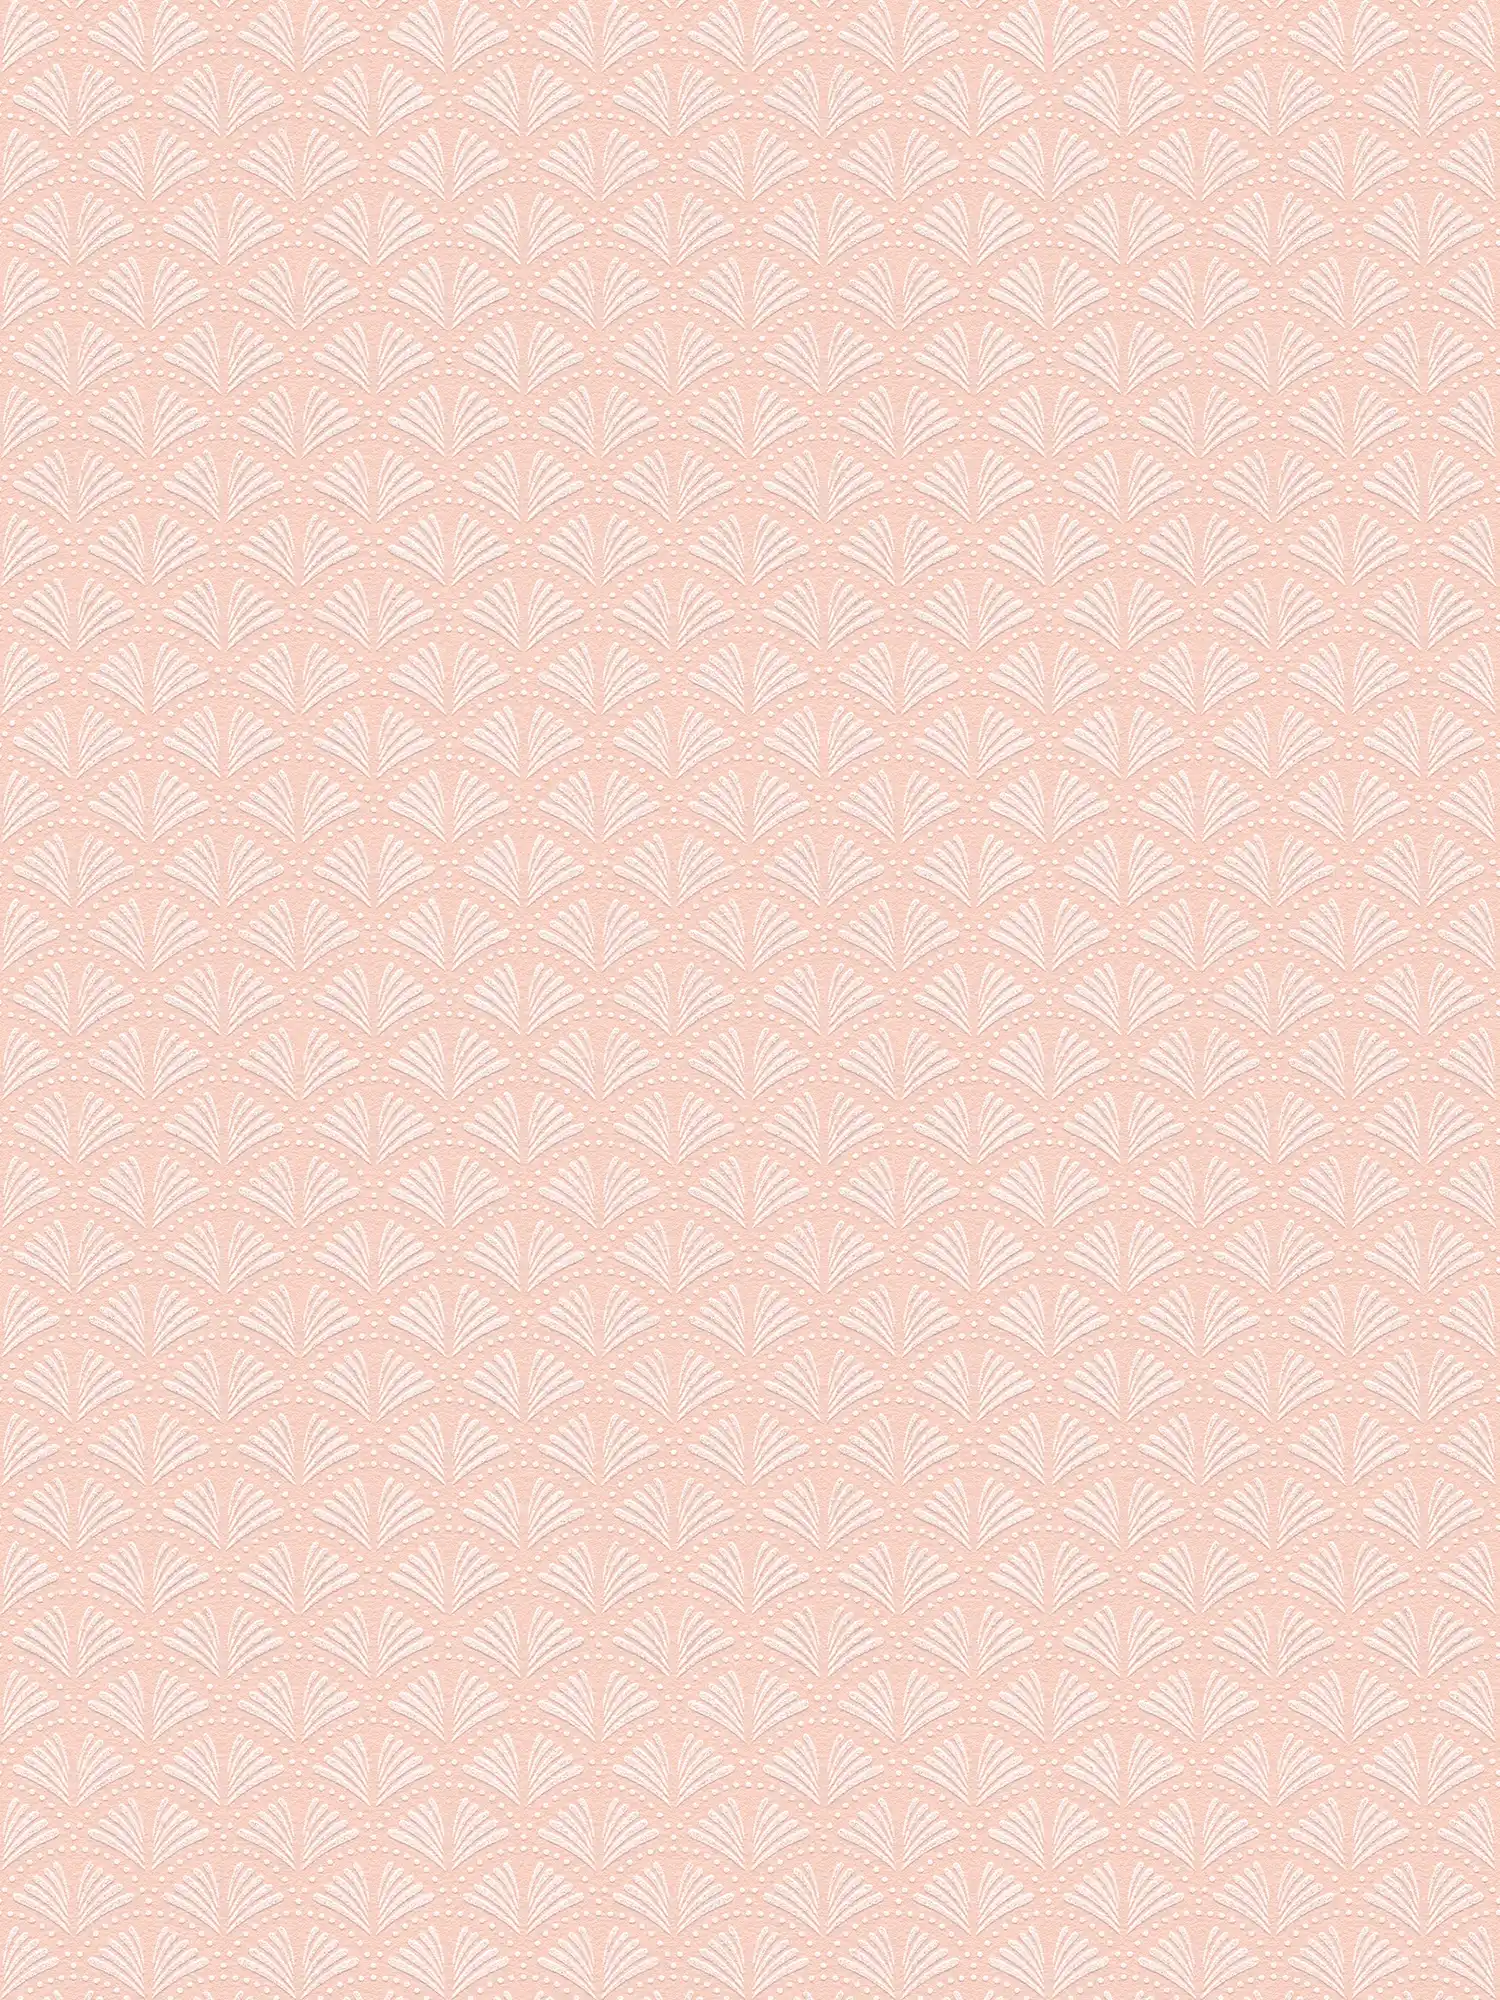 Glitter wallpaper pink with fan design in retro style - metallic, pink, white
